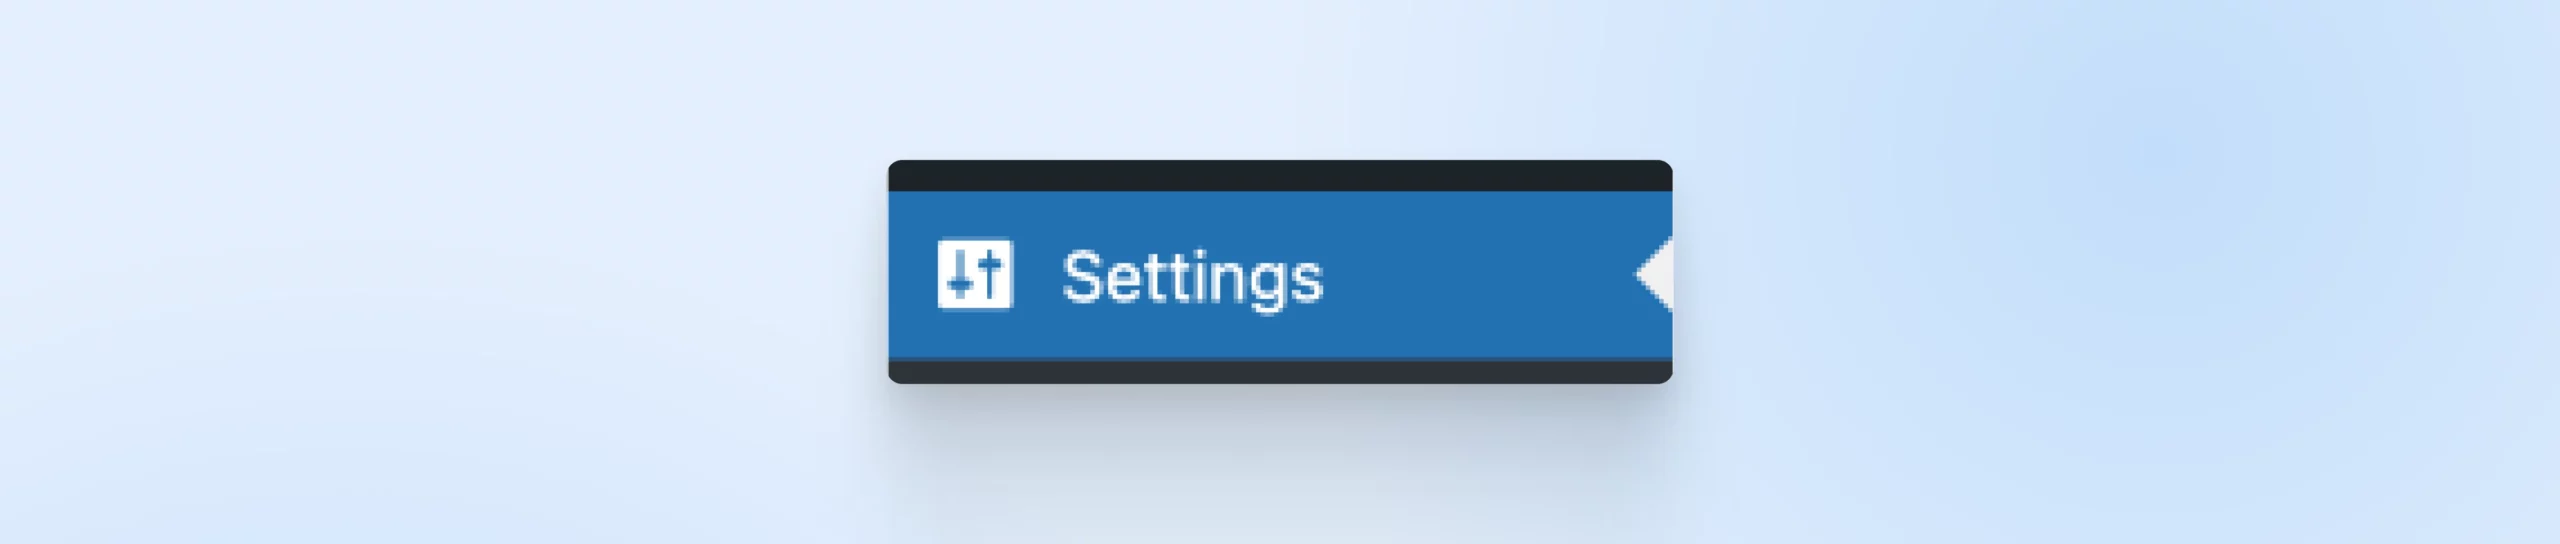 screenshot showing the settings button in the WP nav